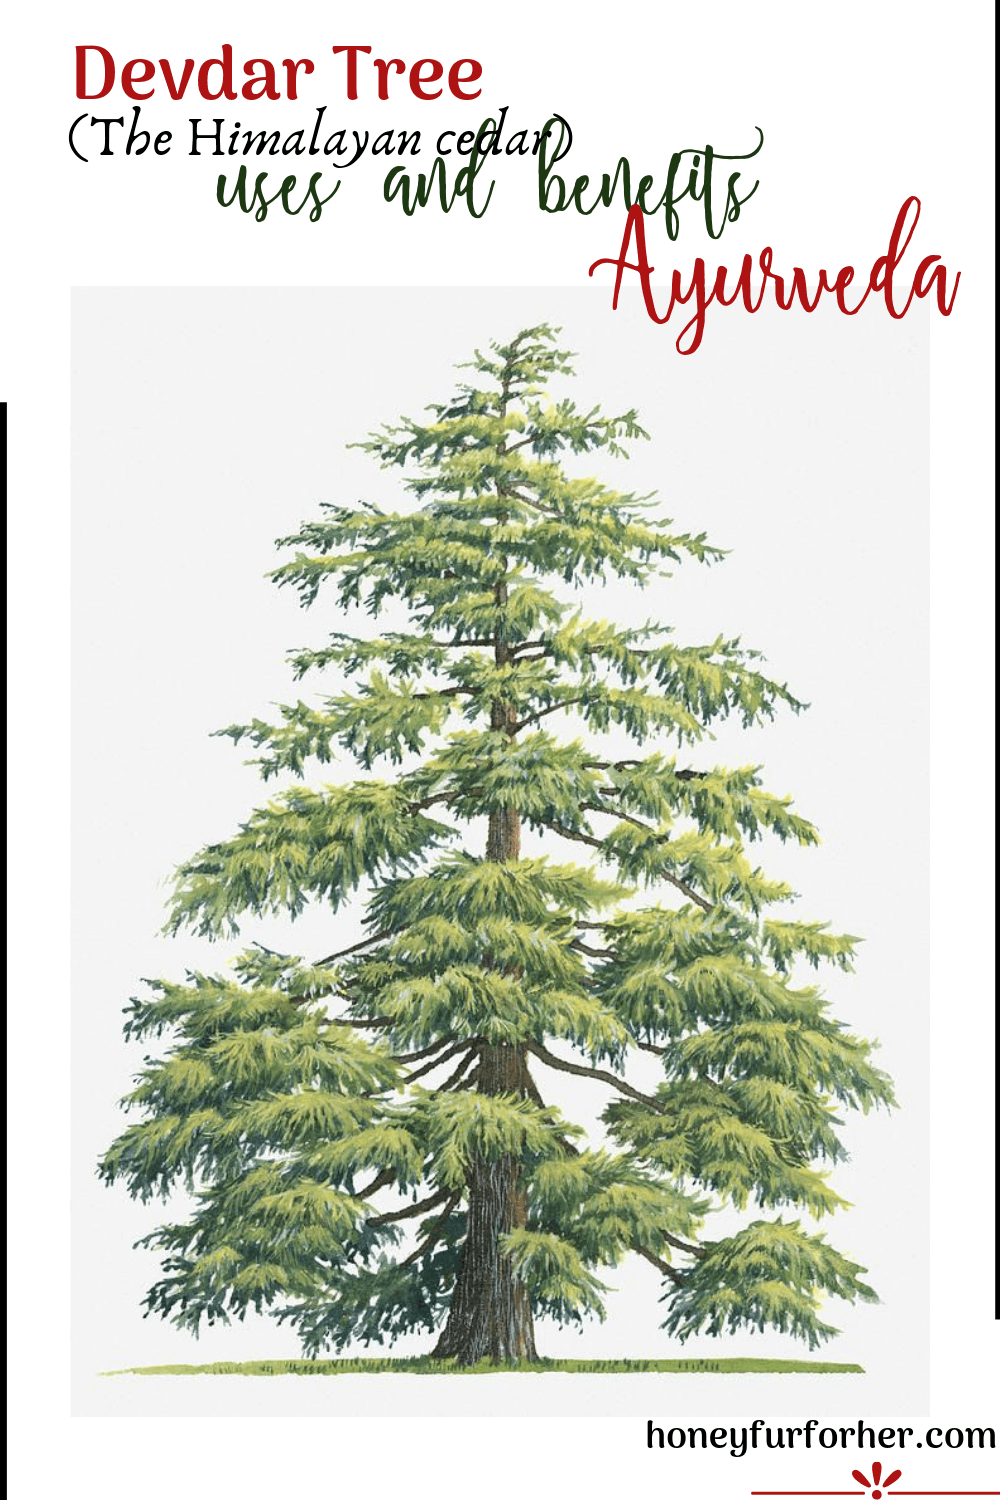 Devadaru Tree Himalayan Cedar Benefits Pinterest Pin Image